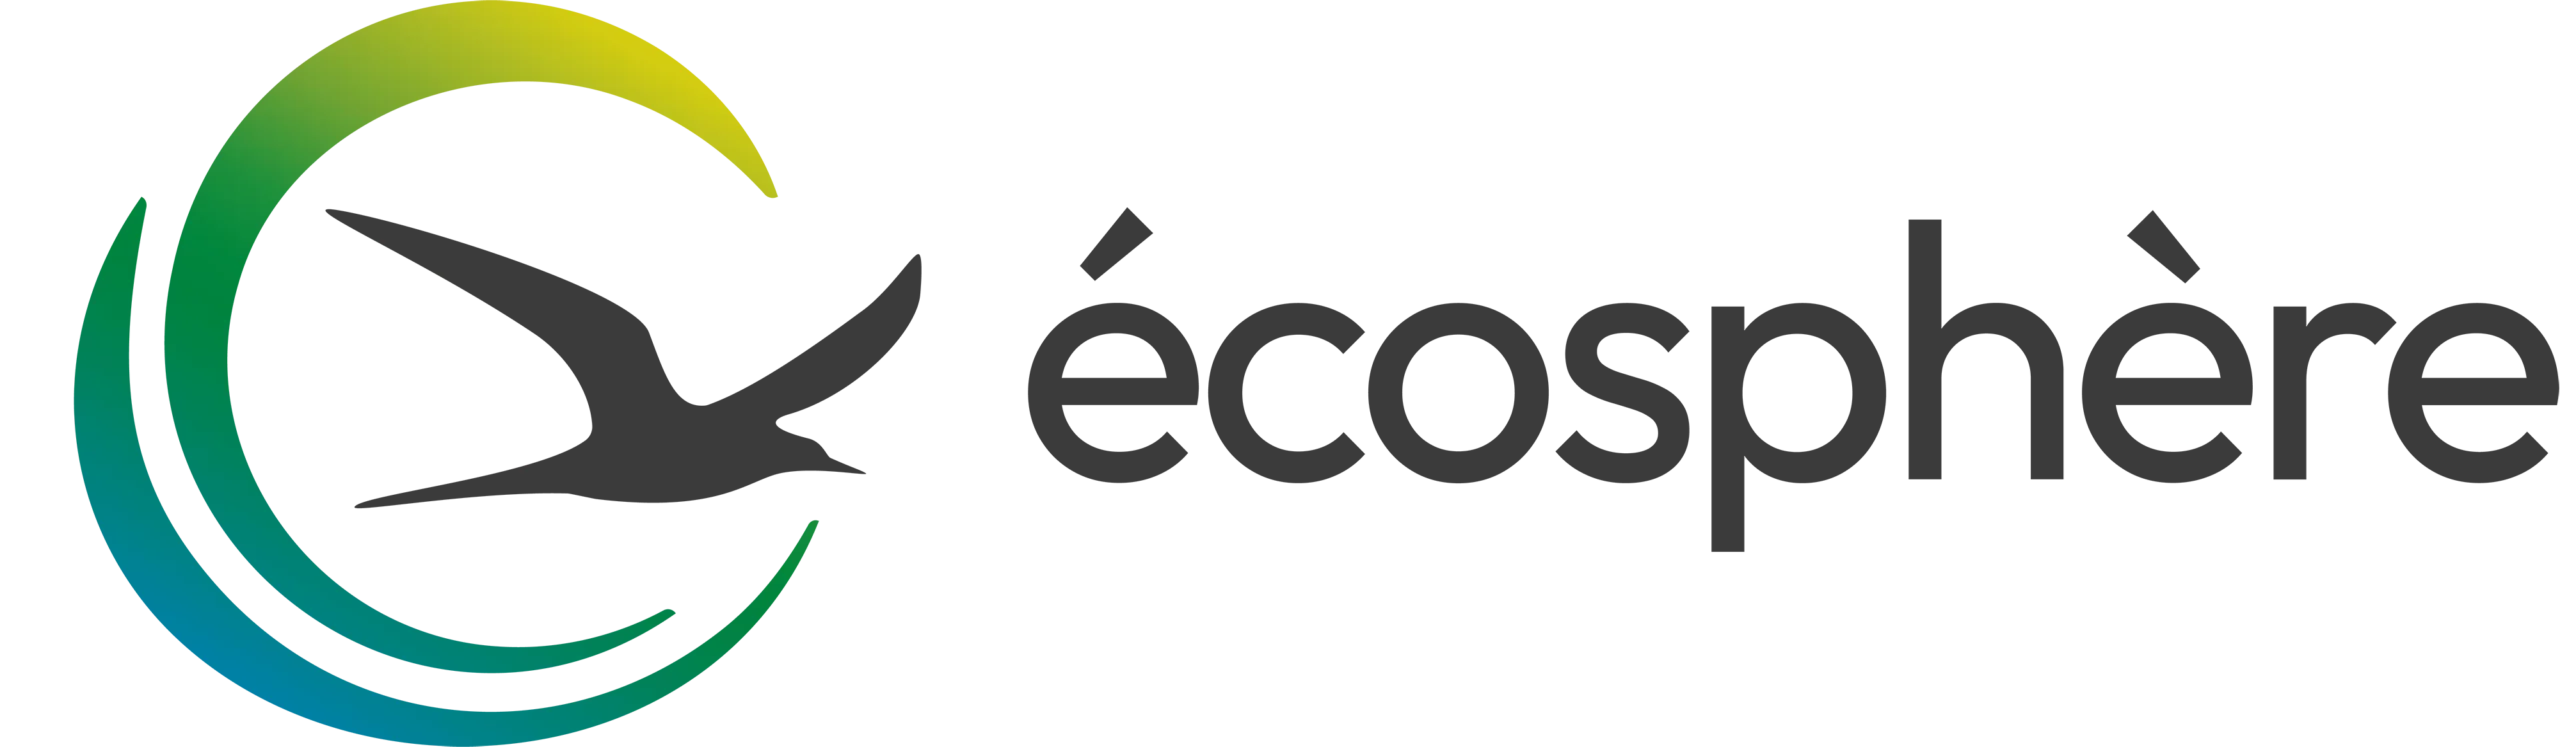 Ecosphère logo